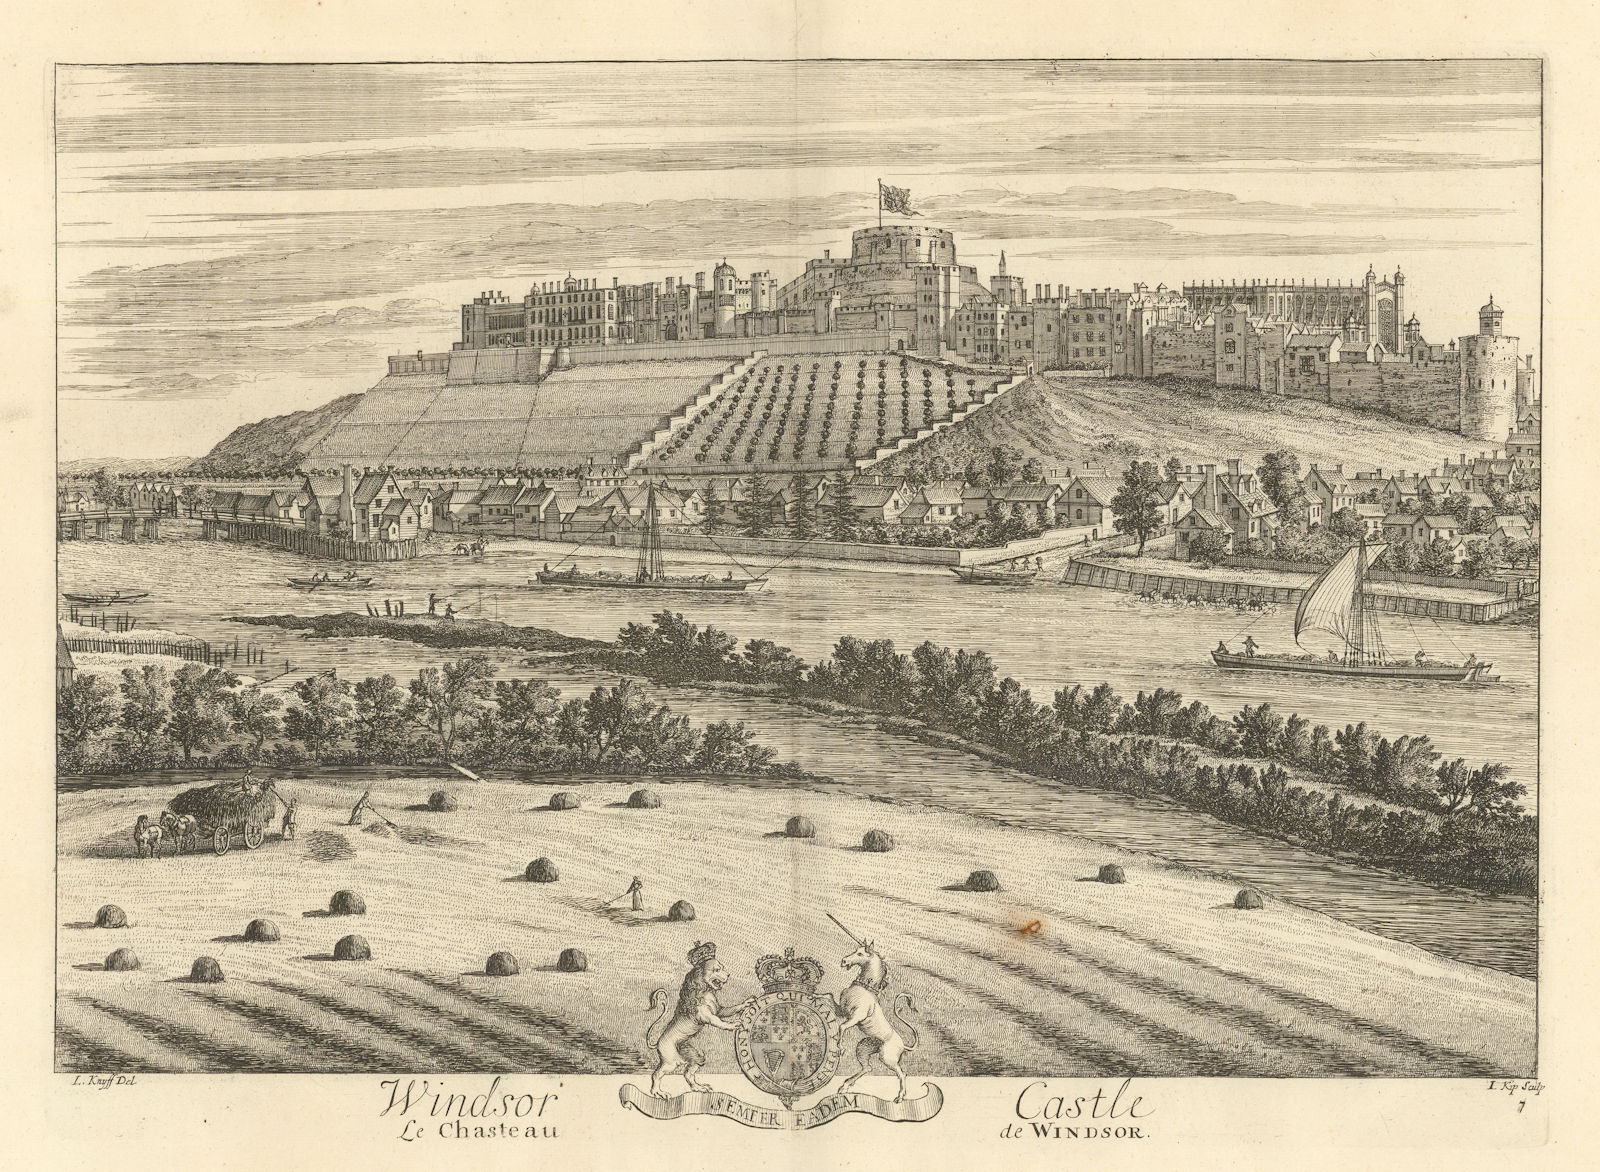 Windsor Castle from the Thames by Kip & Knyff. Le Chasteau de Windsor 1709